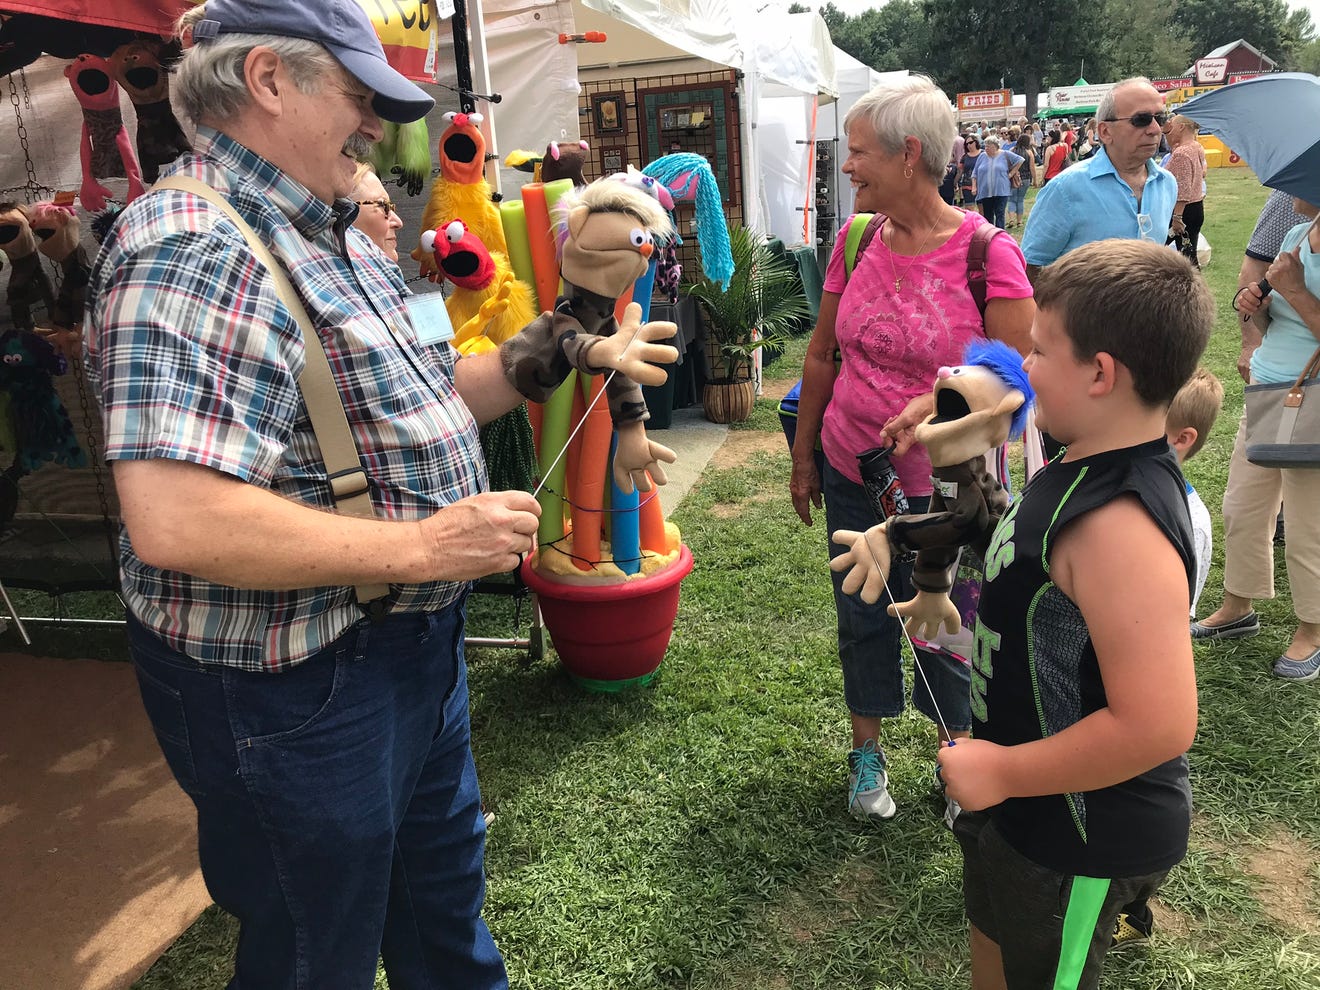 WoodstockNew Paltz Art & Crafts Fair draws thousands with unique items